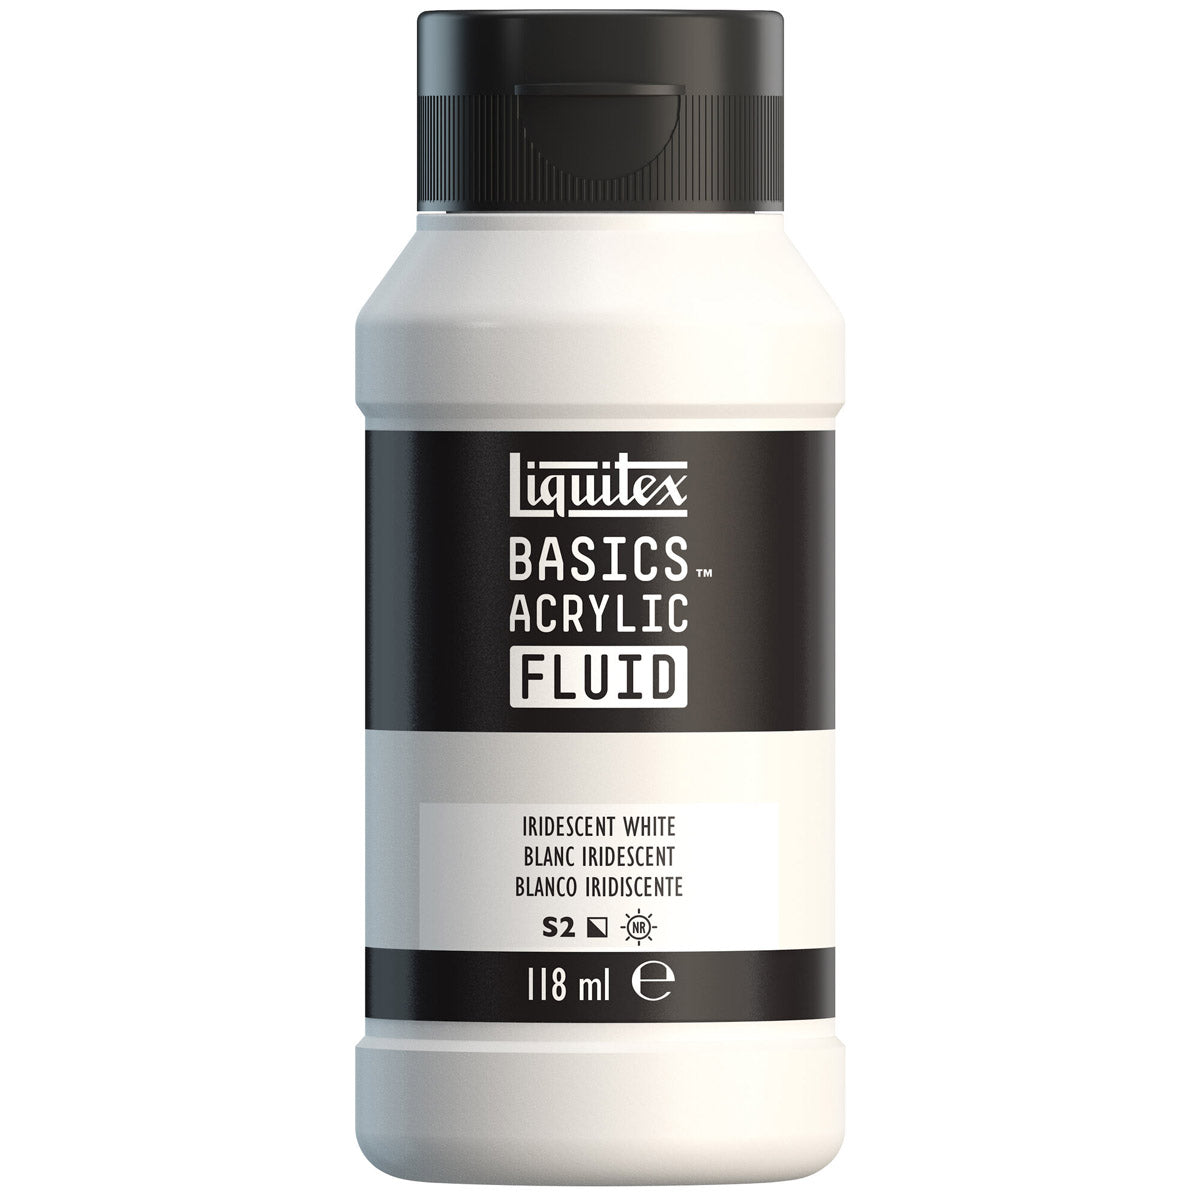 Liquitex Basics Fluid Acrylic 118ml - Iridescent White S2